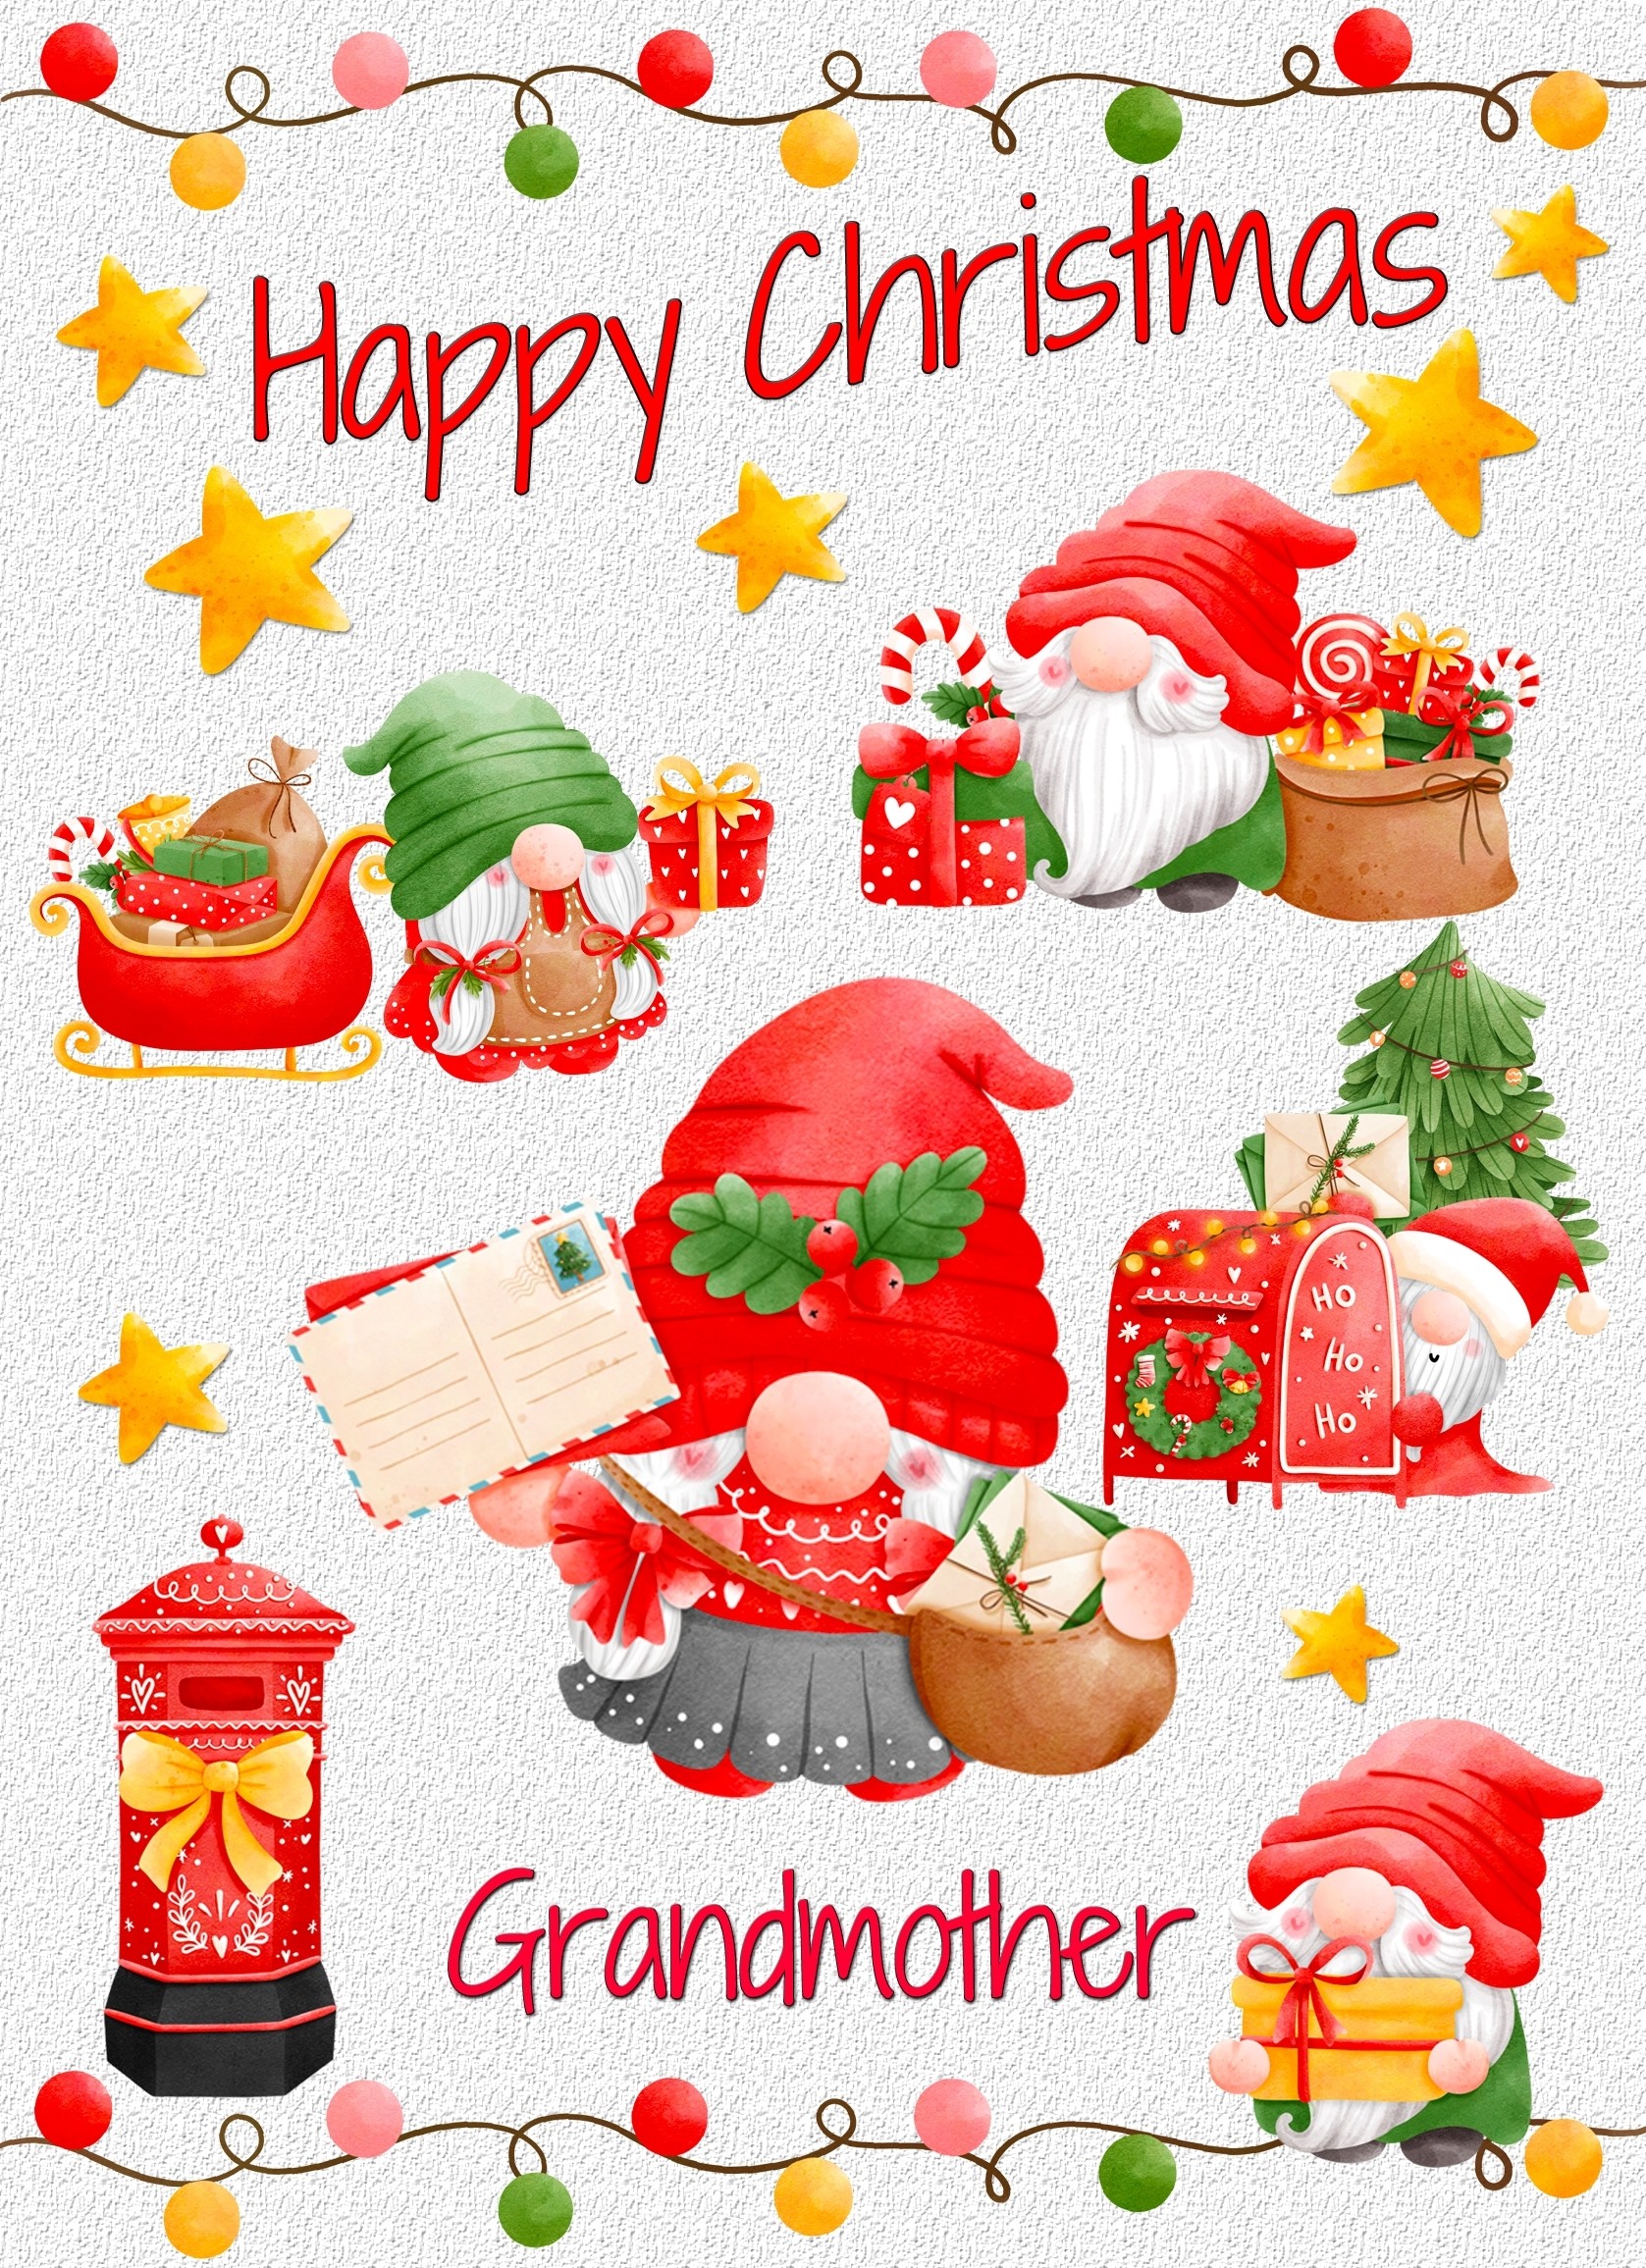 Christmas Card For Grandmother (Gnome, White)